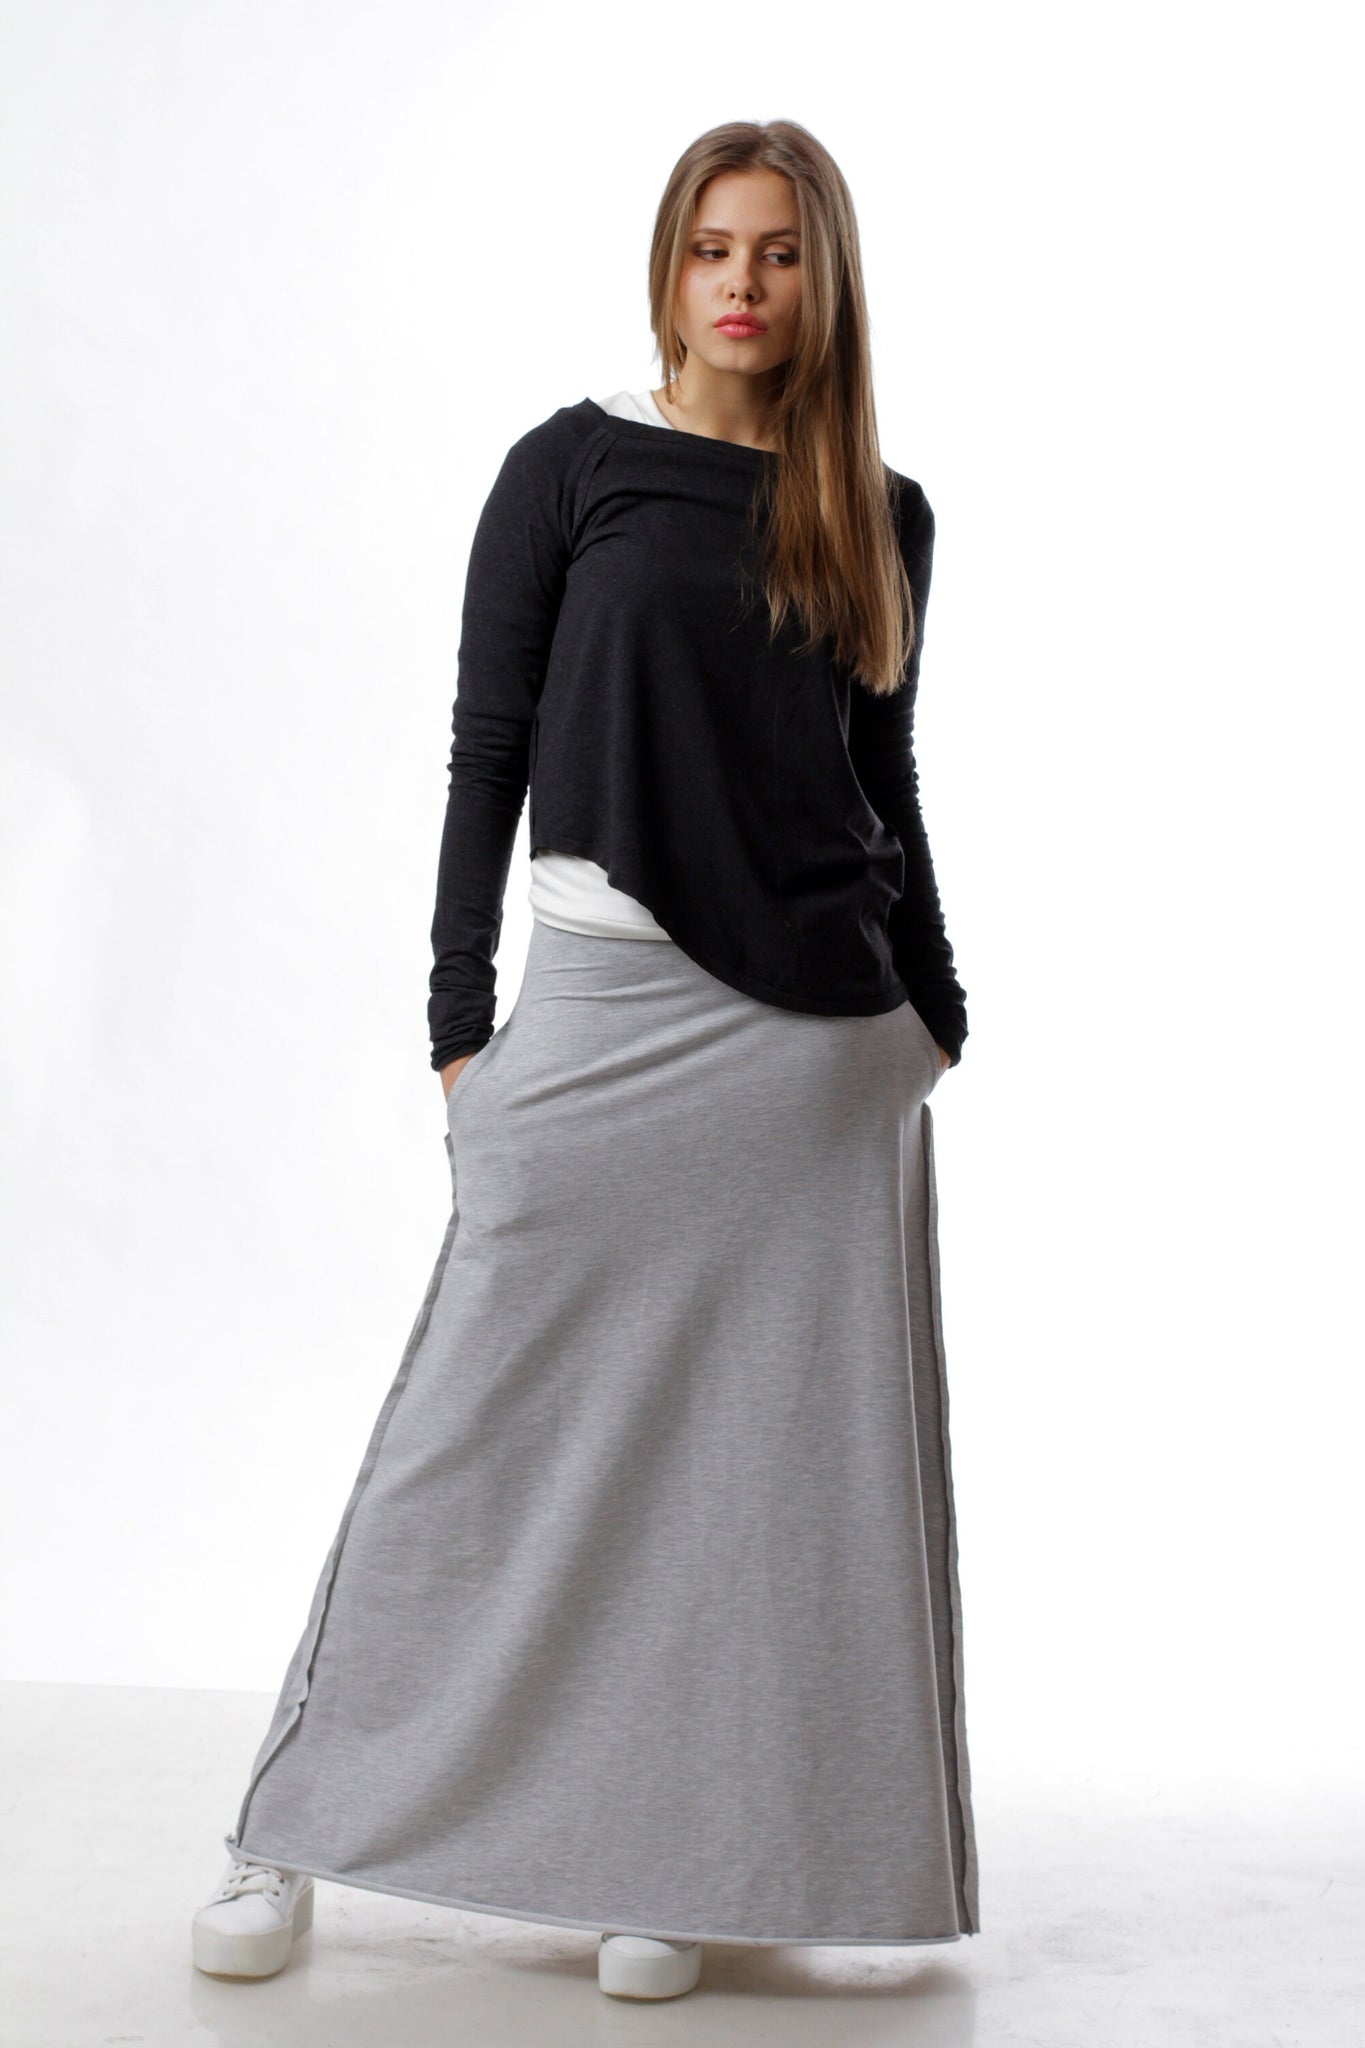 Set "Gray 2", street style wear, maxi skirt, casual set, anthracite jumper, grey skirt, minimalistic wear